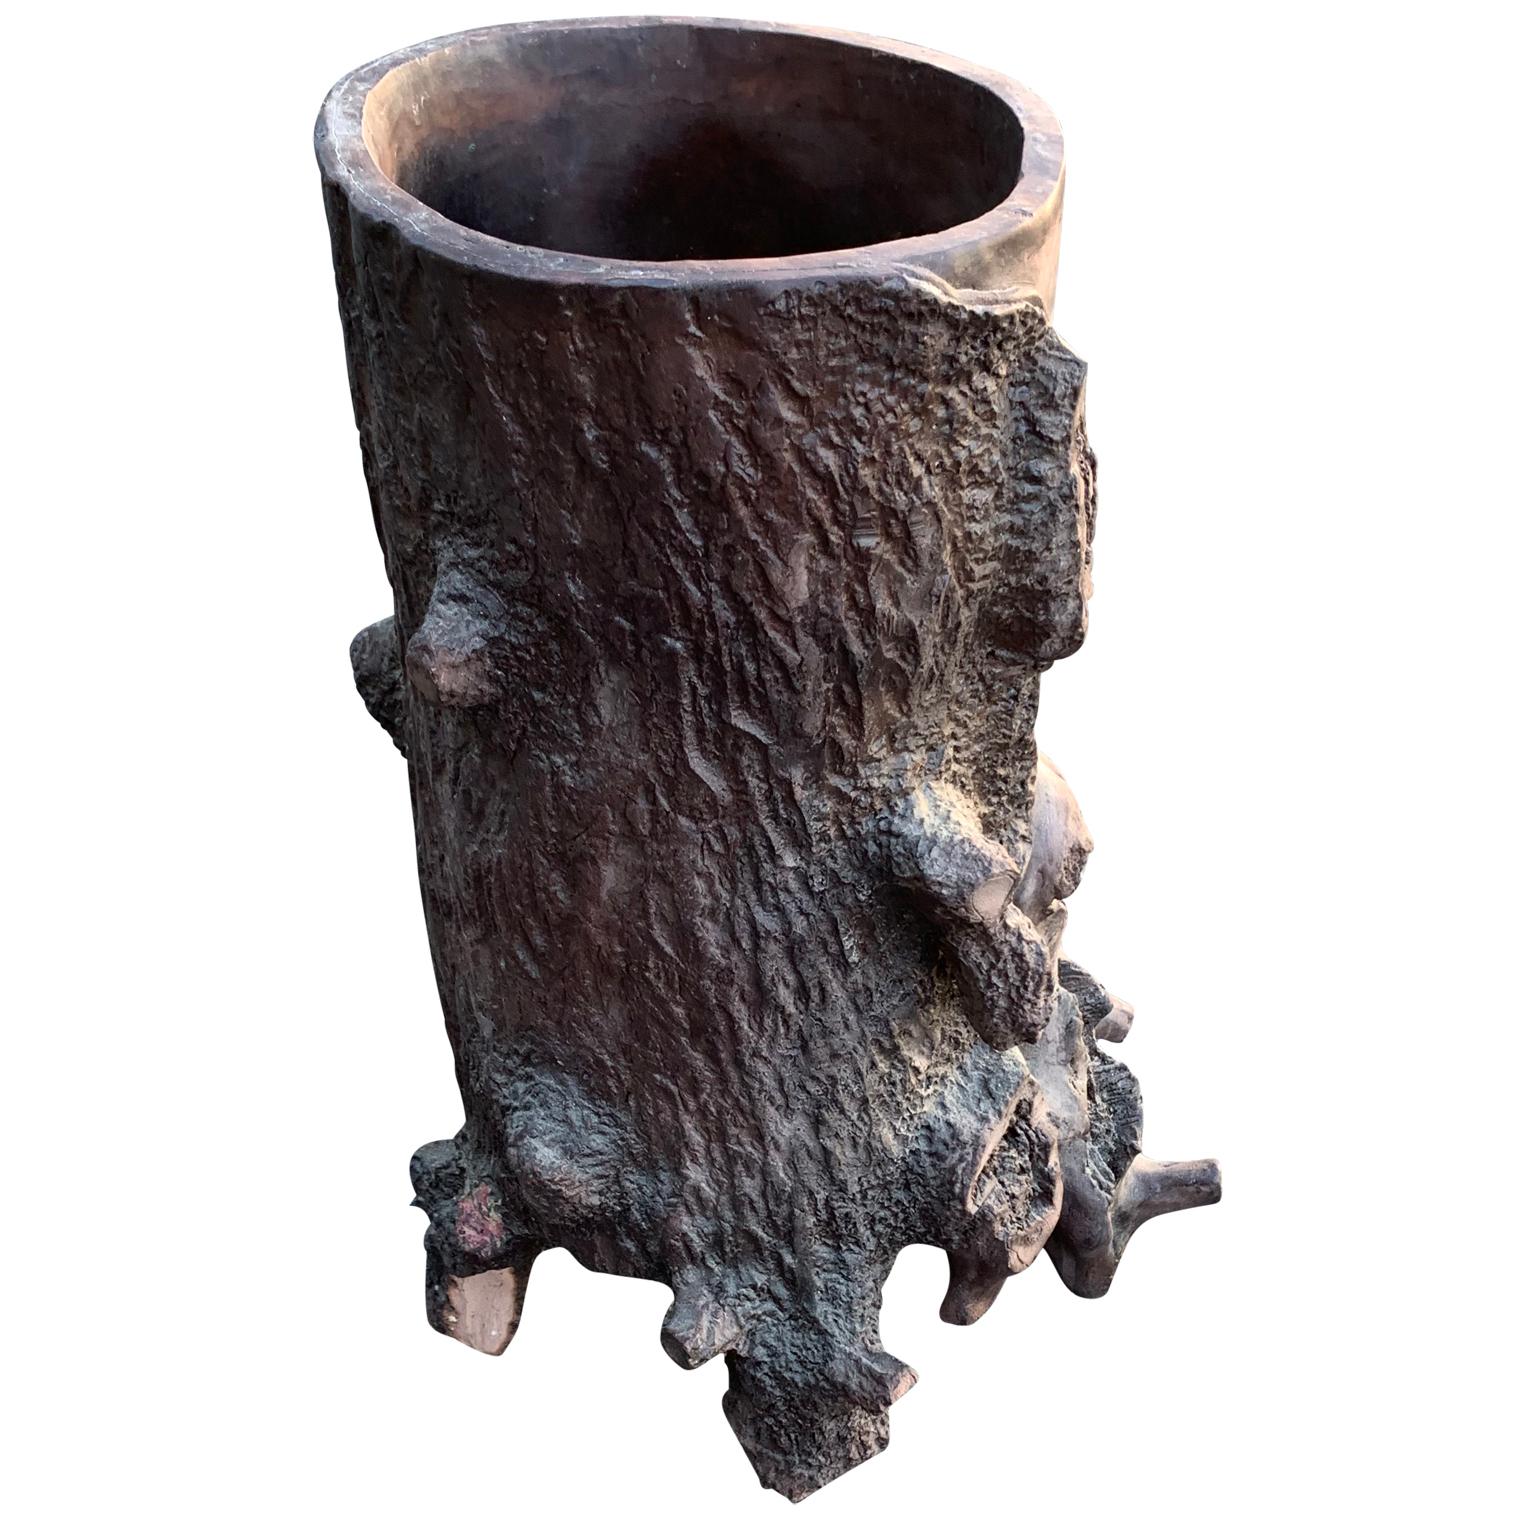 Ceramic faux bois tree trunk urn, planter, flower-vase or jardinière.